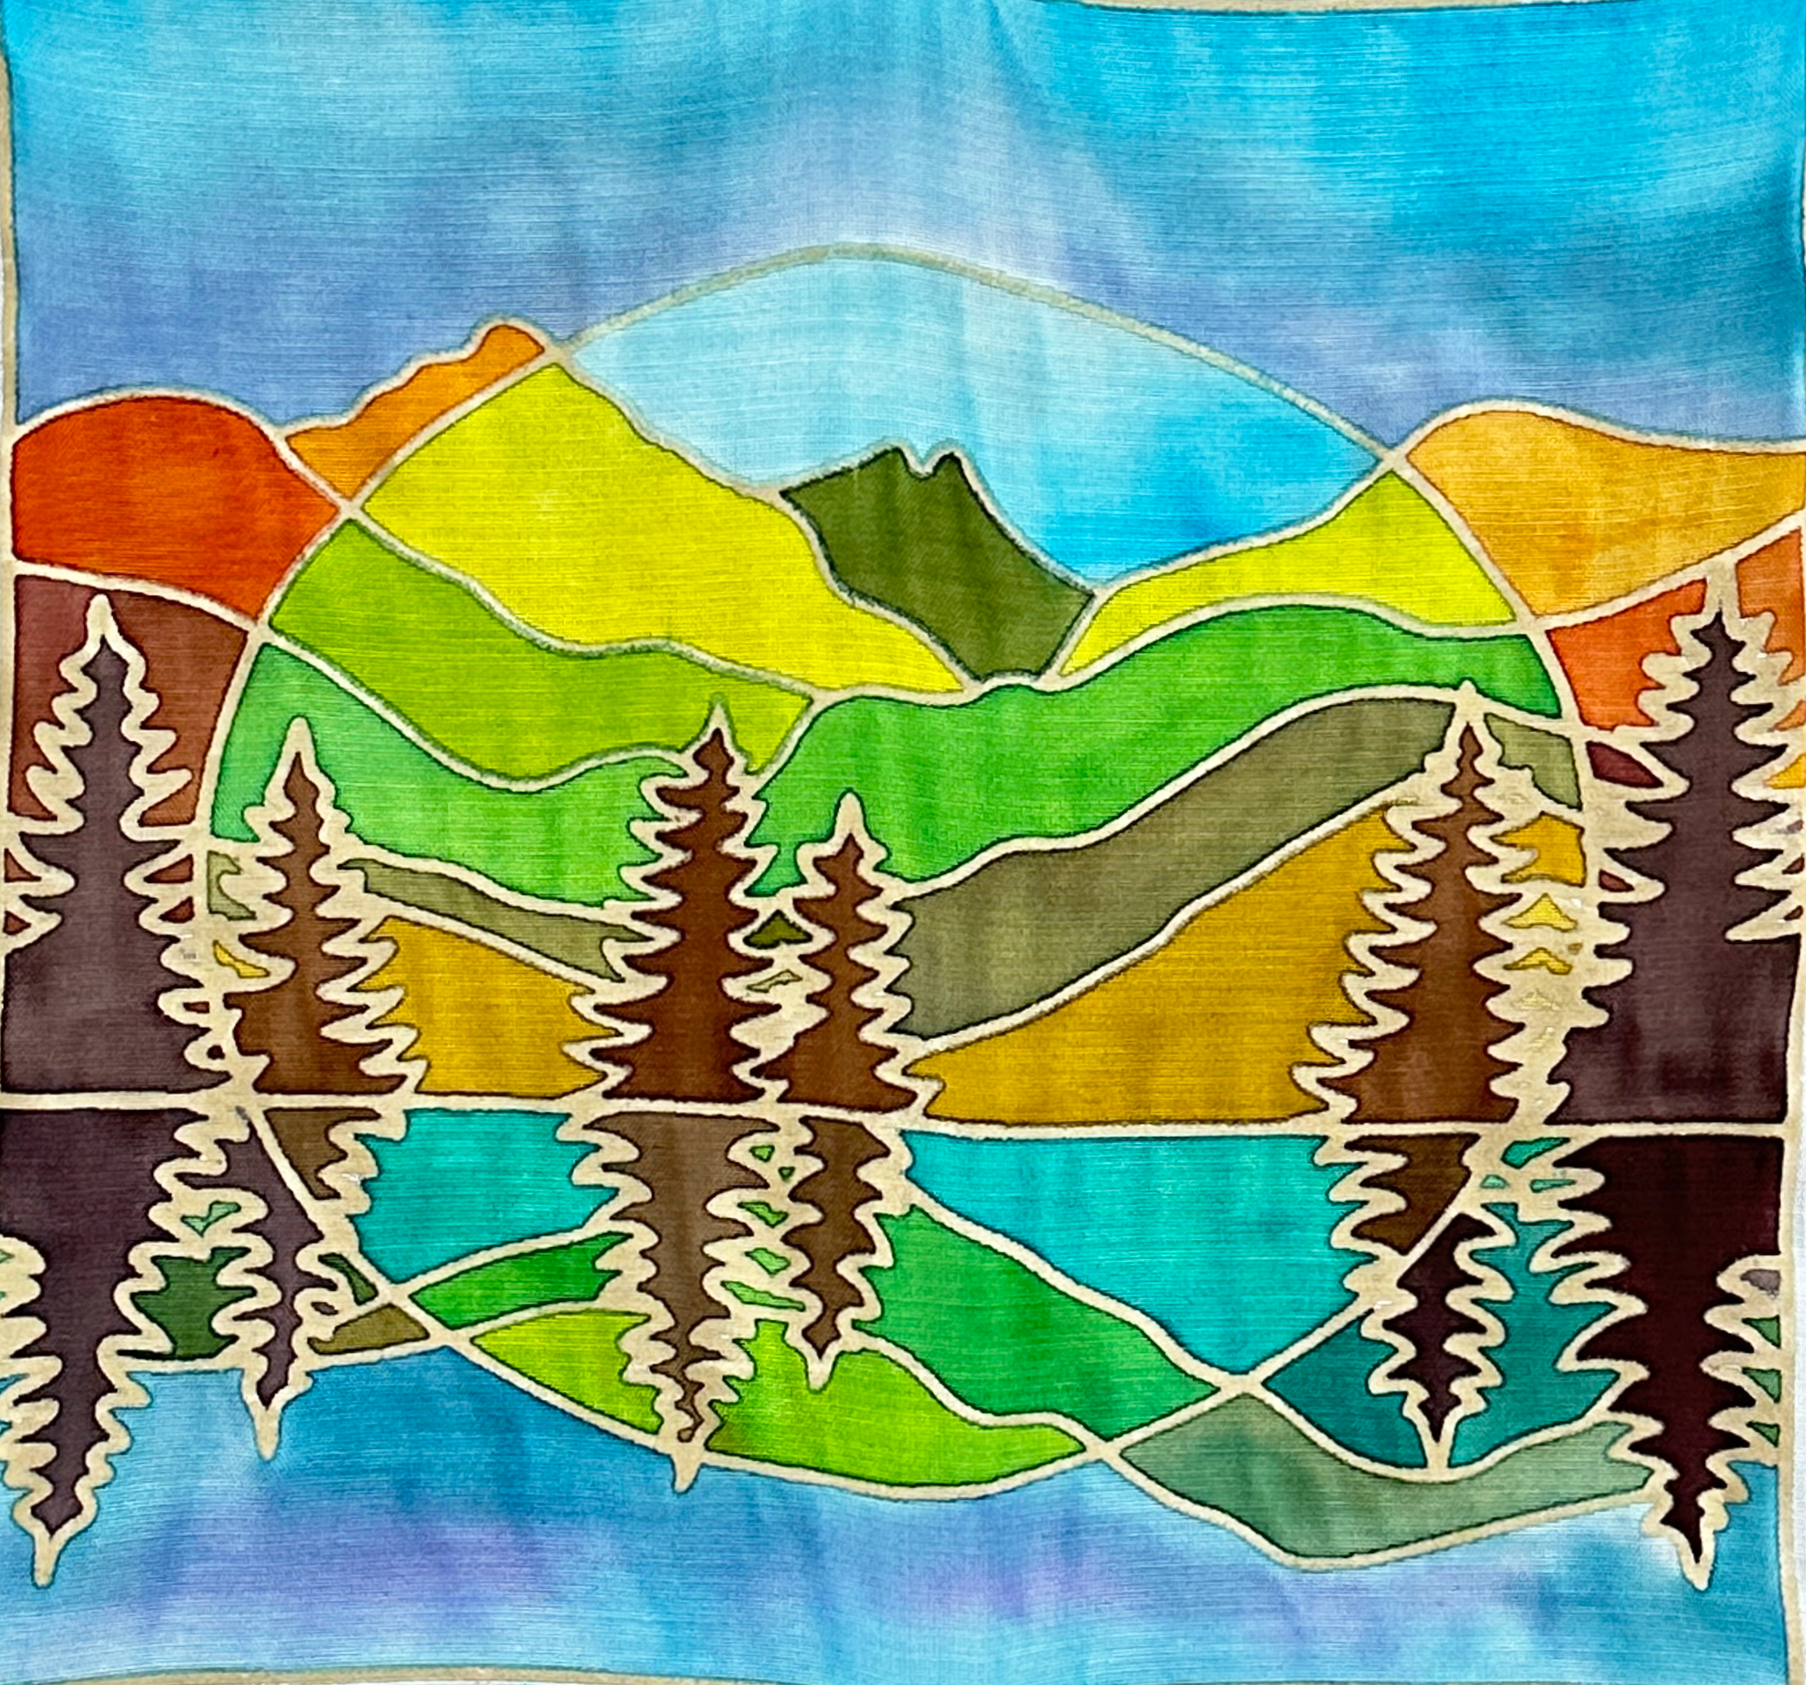 DIY Batik Lake Fabric Painting  Kit - 8x8 Inch Pre Drawn Wax Design, Paint, Brush and Palette